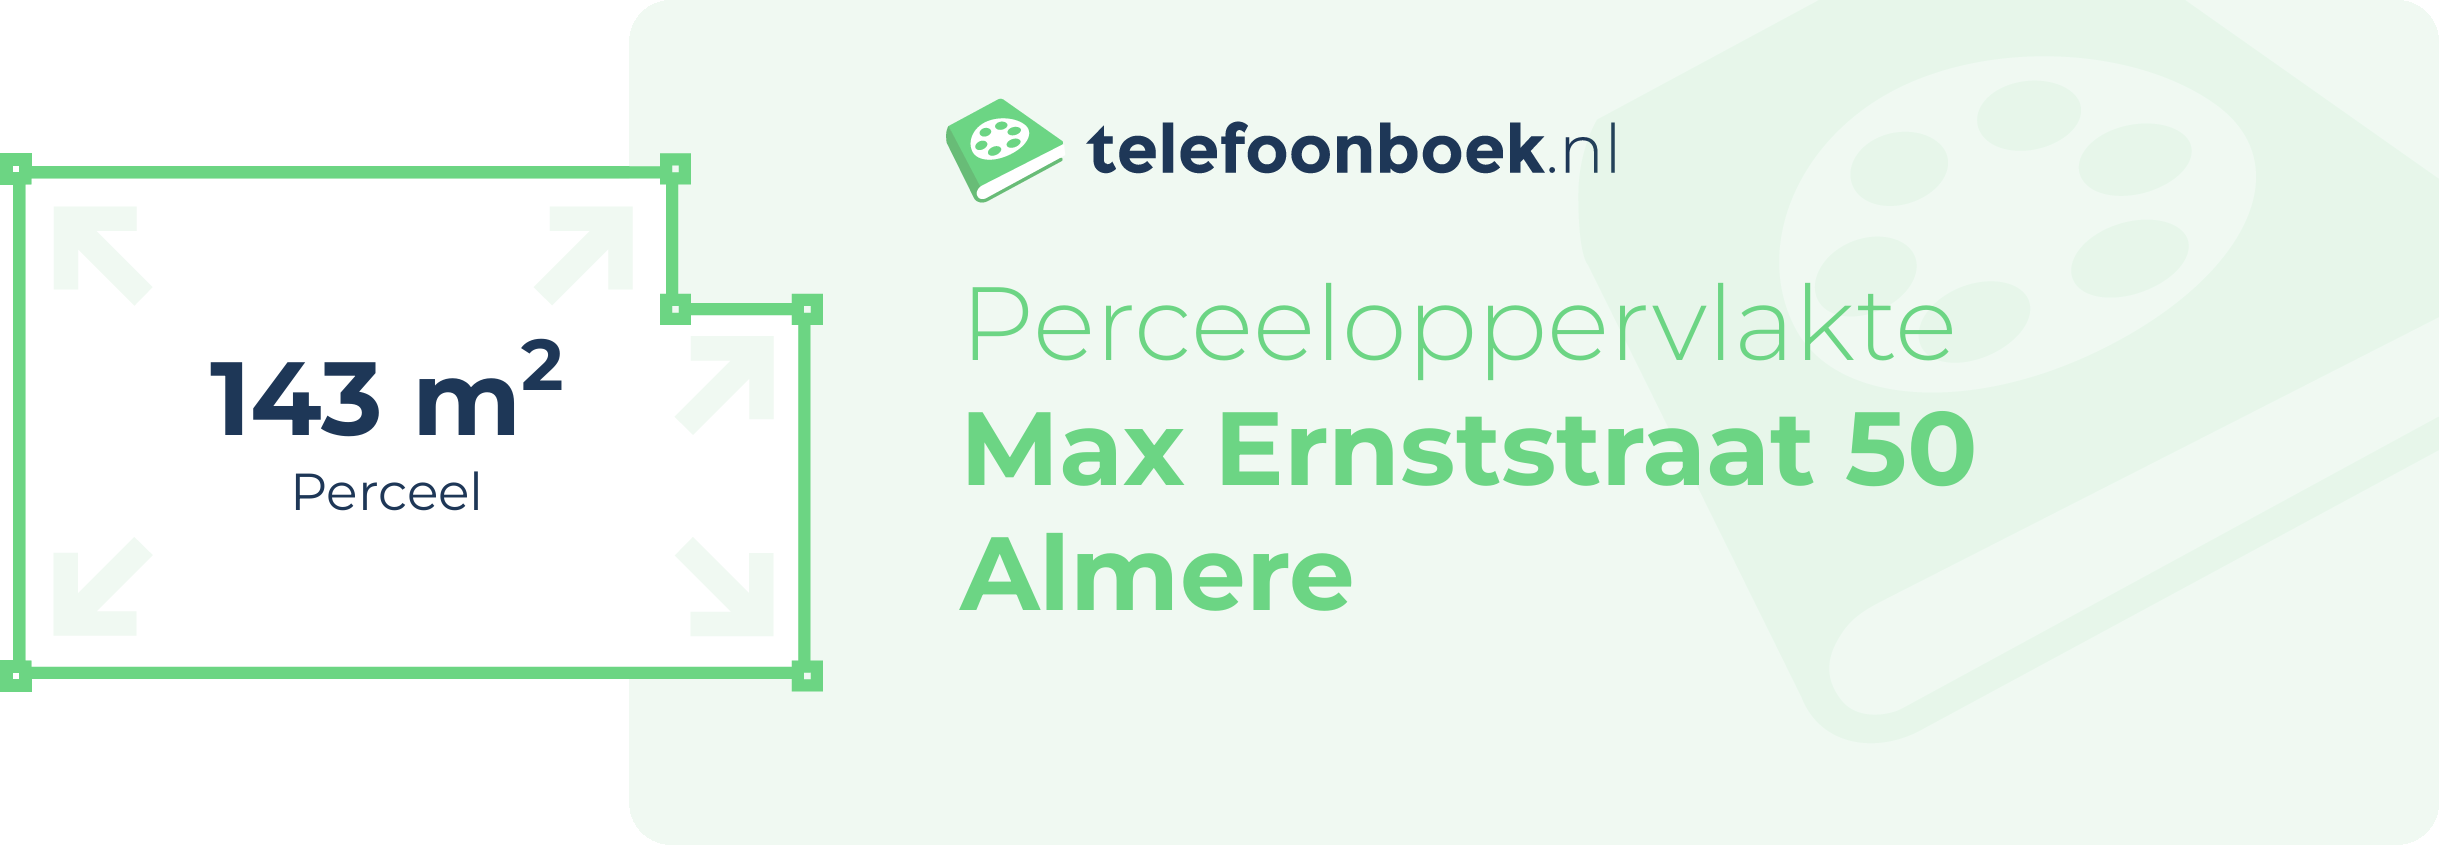 Perceeloppervlakte Max Ernststraat 50 Almere